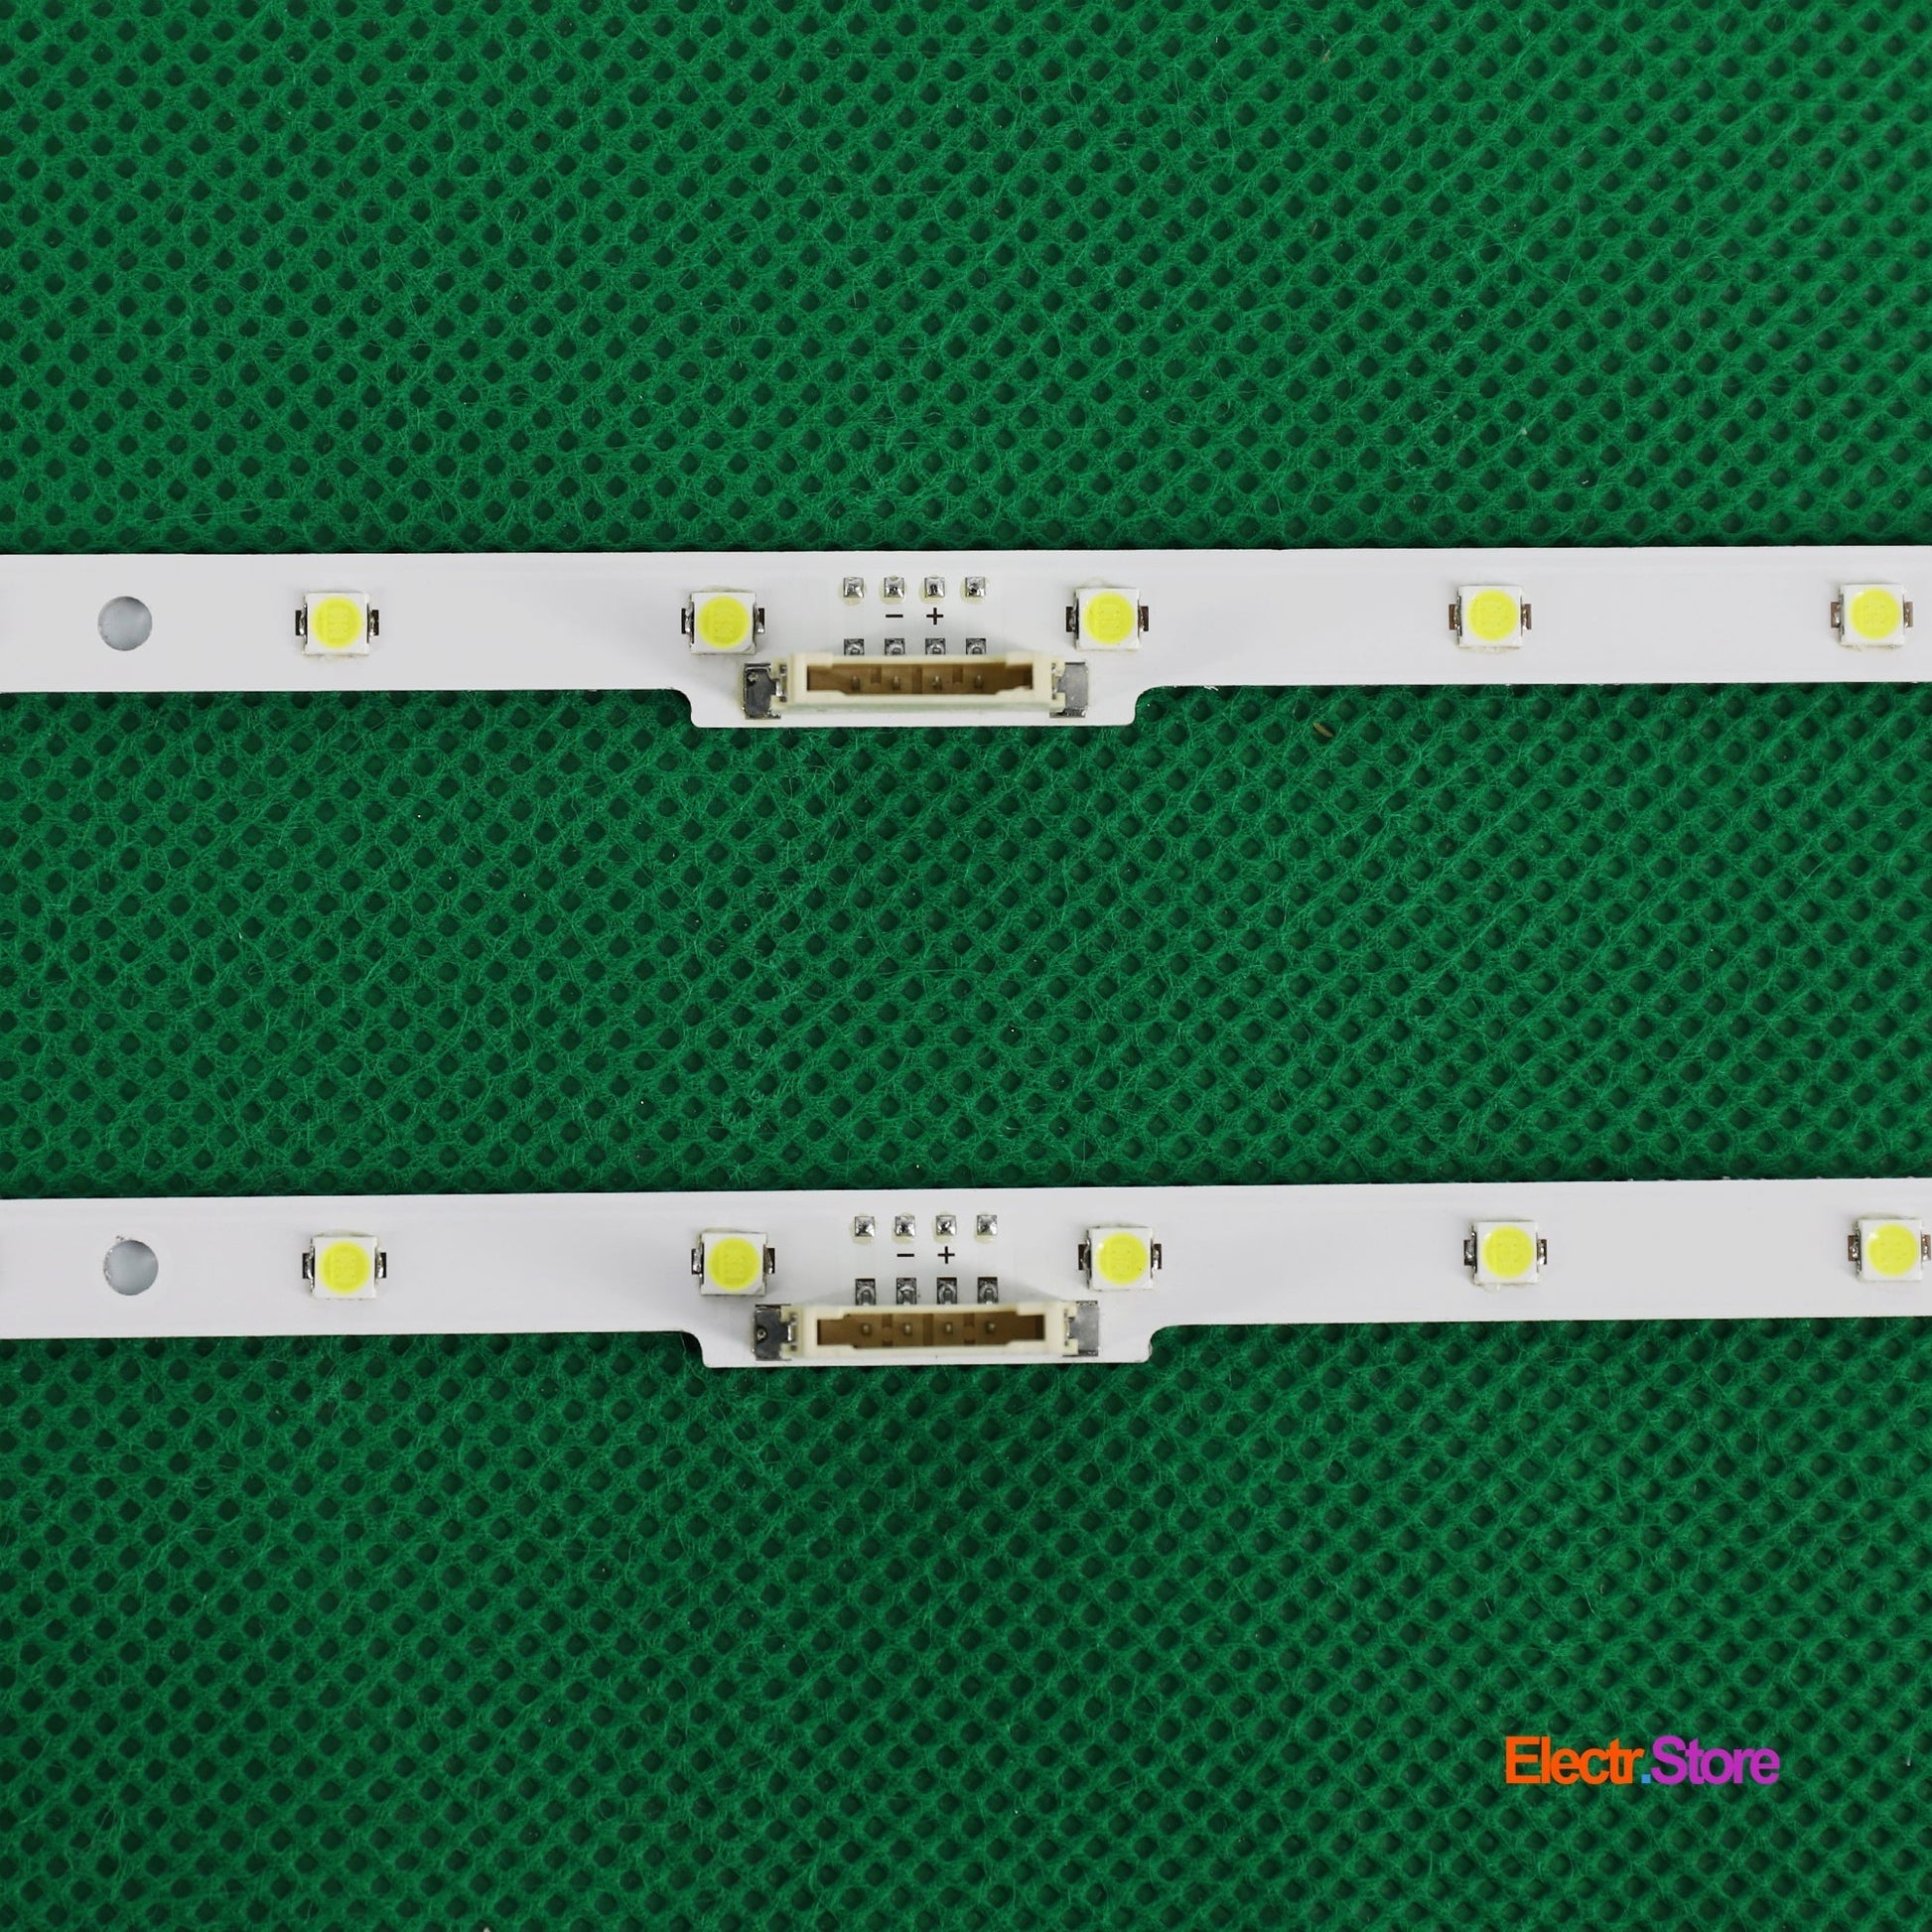 LED Backlight Strip Kits, AOT_40_NU7100F, LM41-00550A, LM41-00549A, BN96-45955A, 2X23LED (2 pcs/kit), for TV 40" SAMSUNG: UE40NU7110WXXN, UE40NU7112KXXH, UE40NU7115KXXC, UE40NU7120KXXU 40" LED Backlights LM41-00550A Samsung Electr.Store